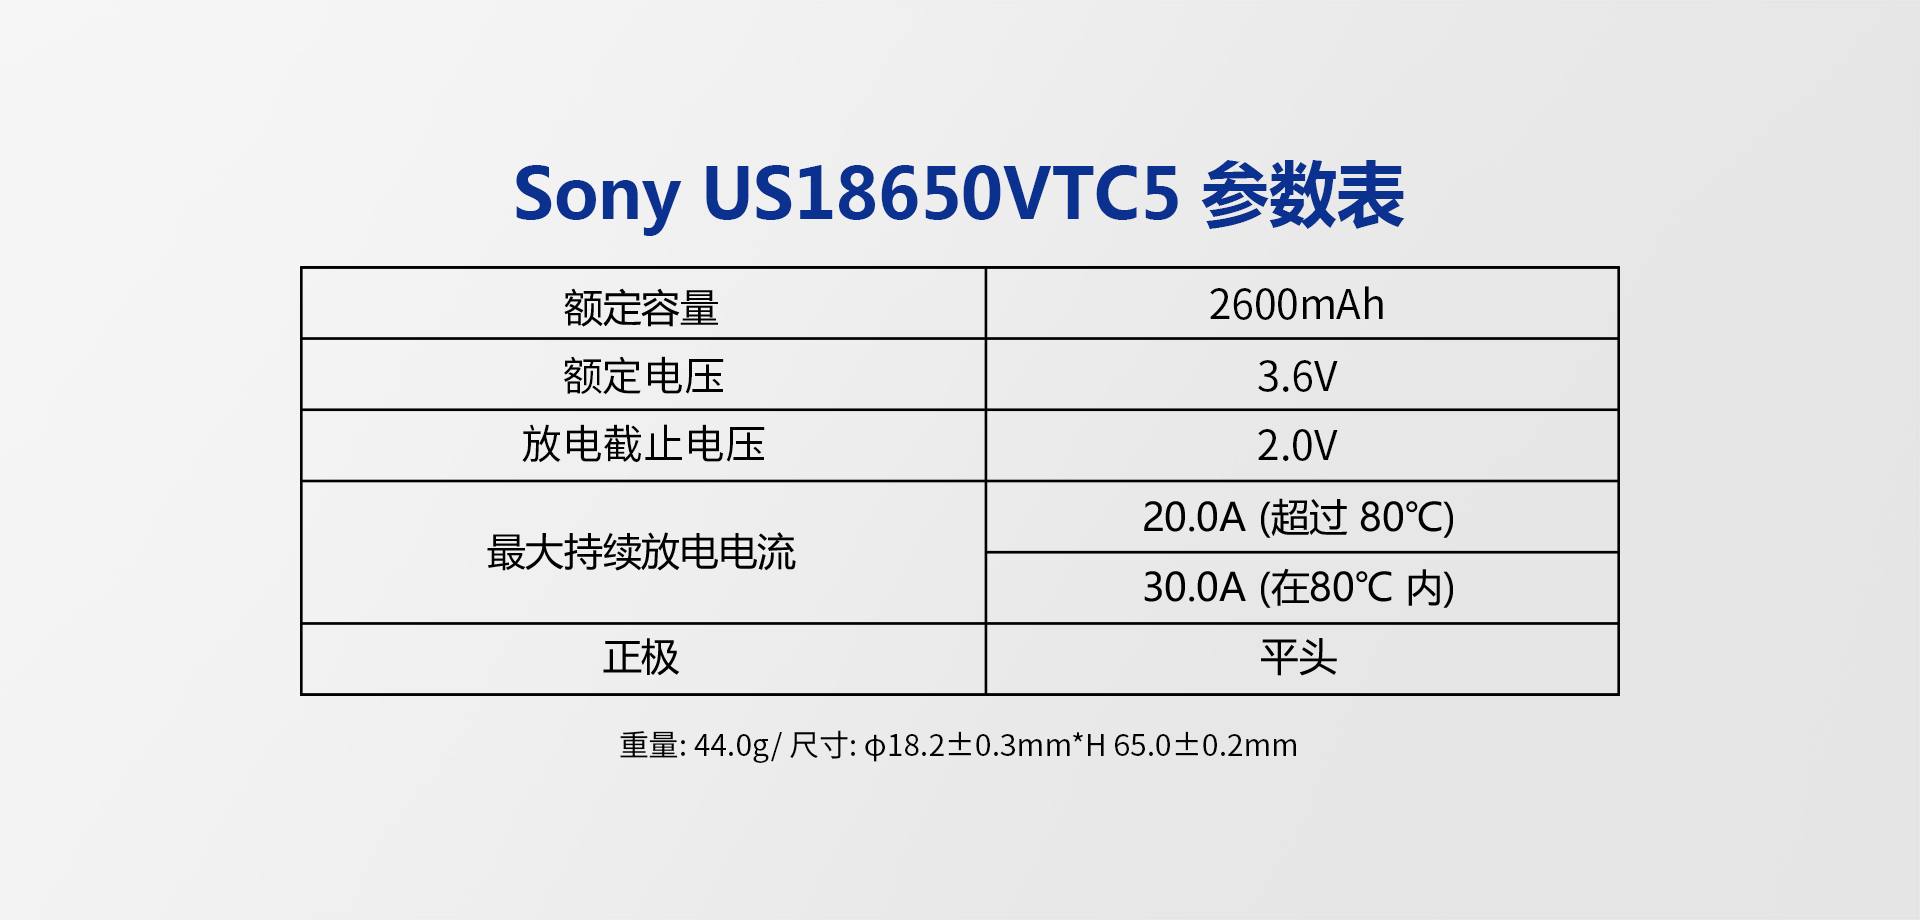 Sony US18650VTC5A